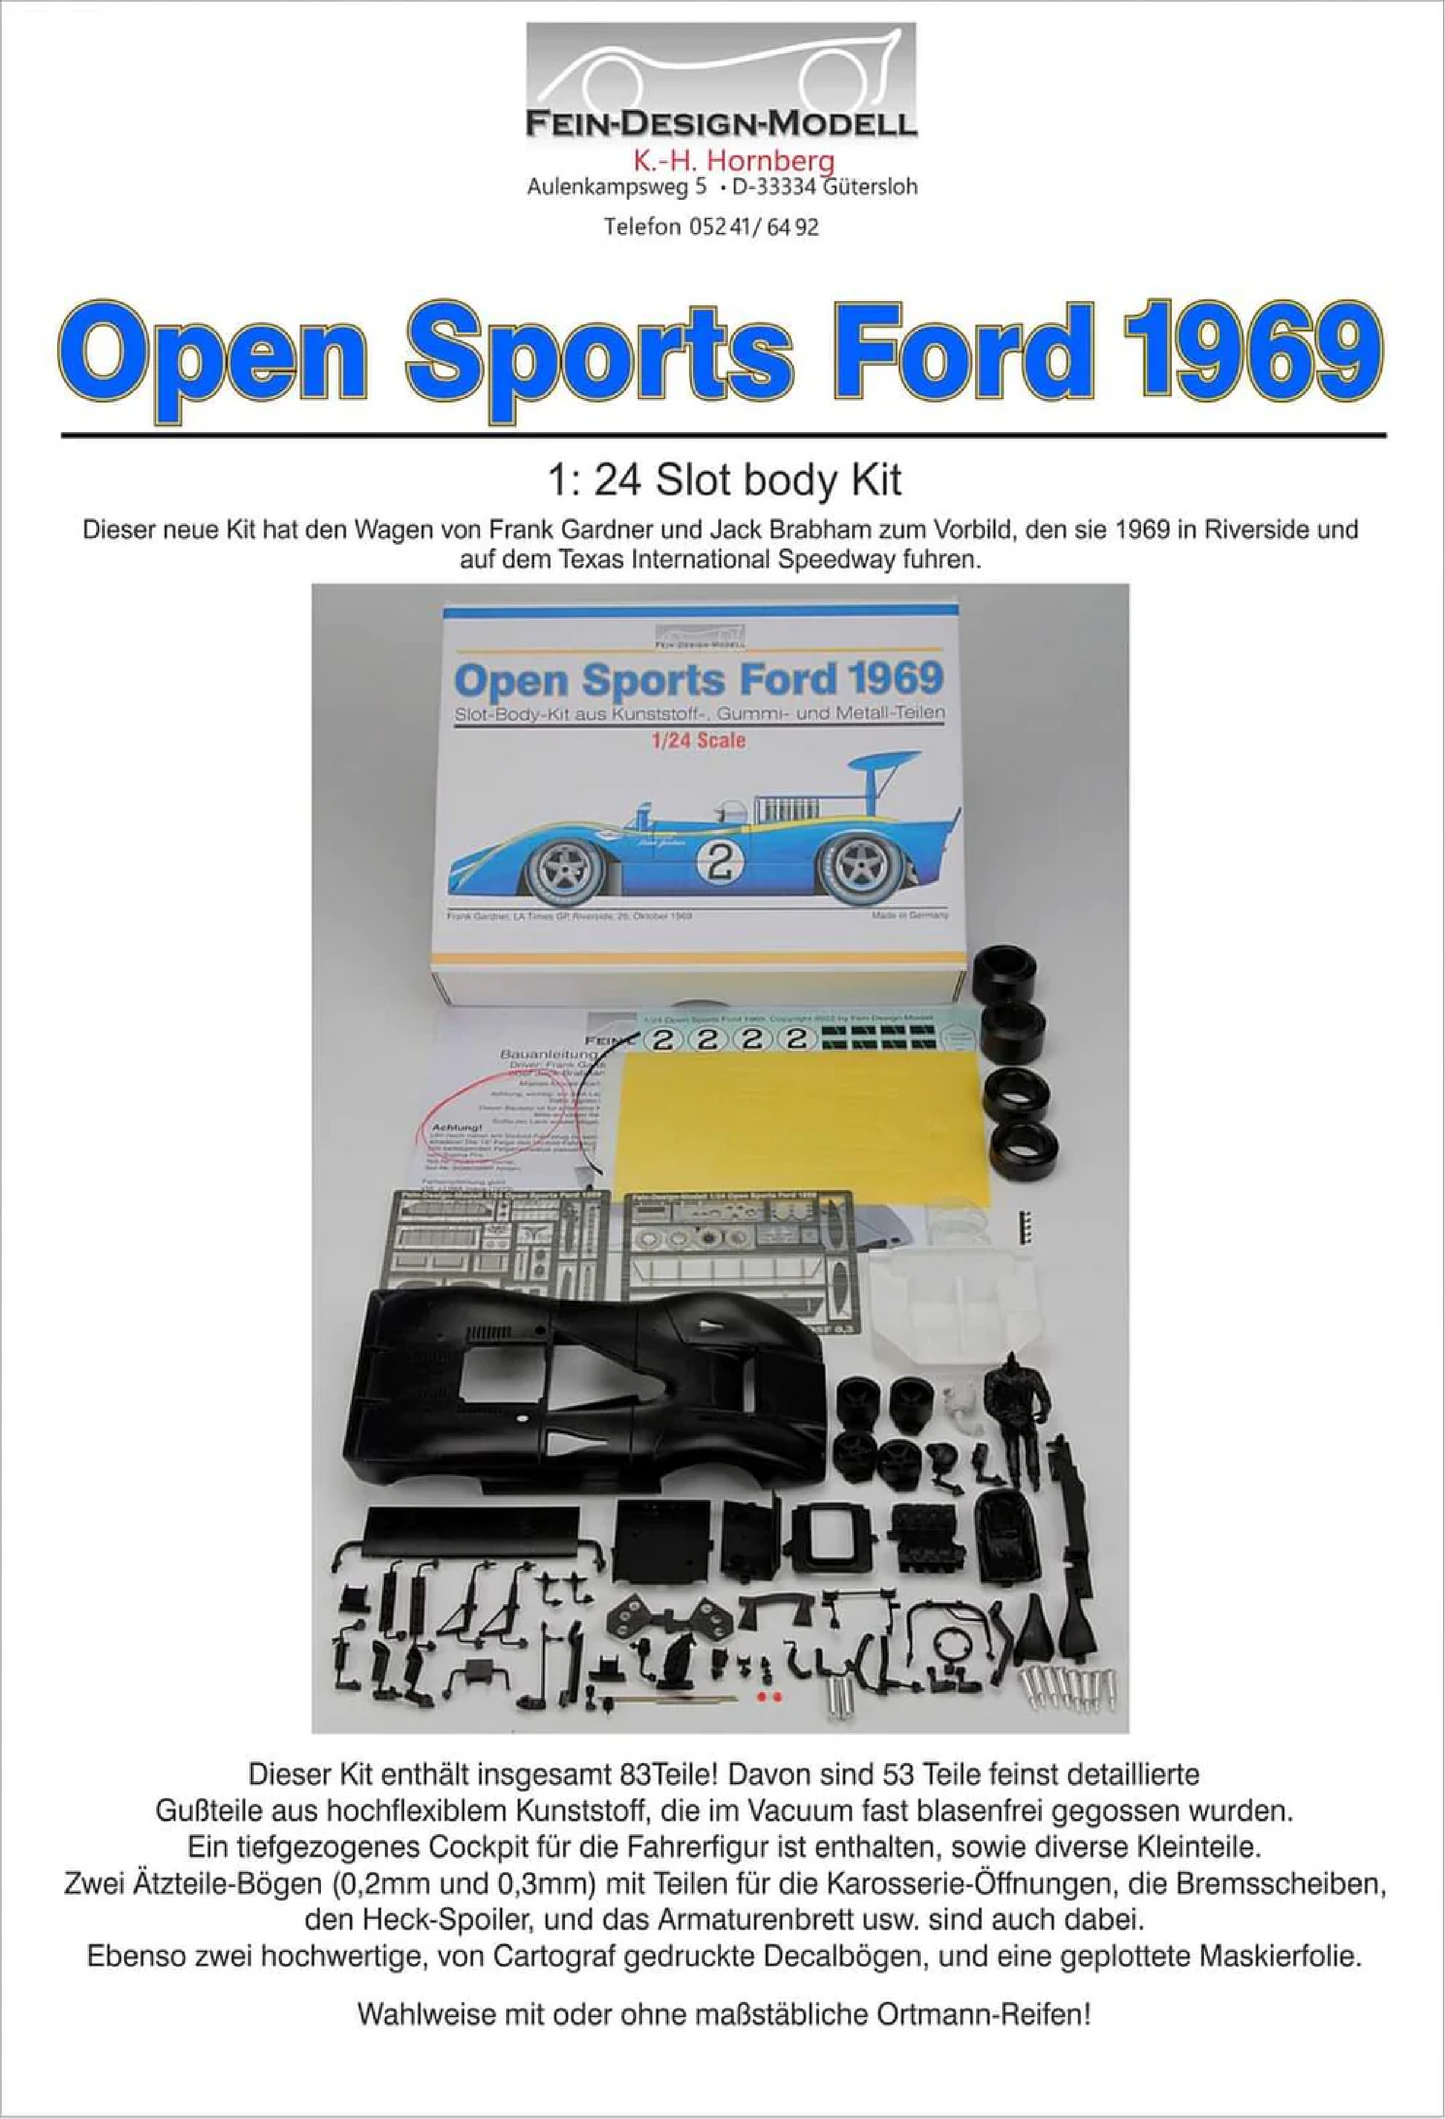 Fein Design "Open Sports Ford 1969"